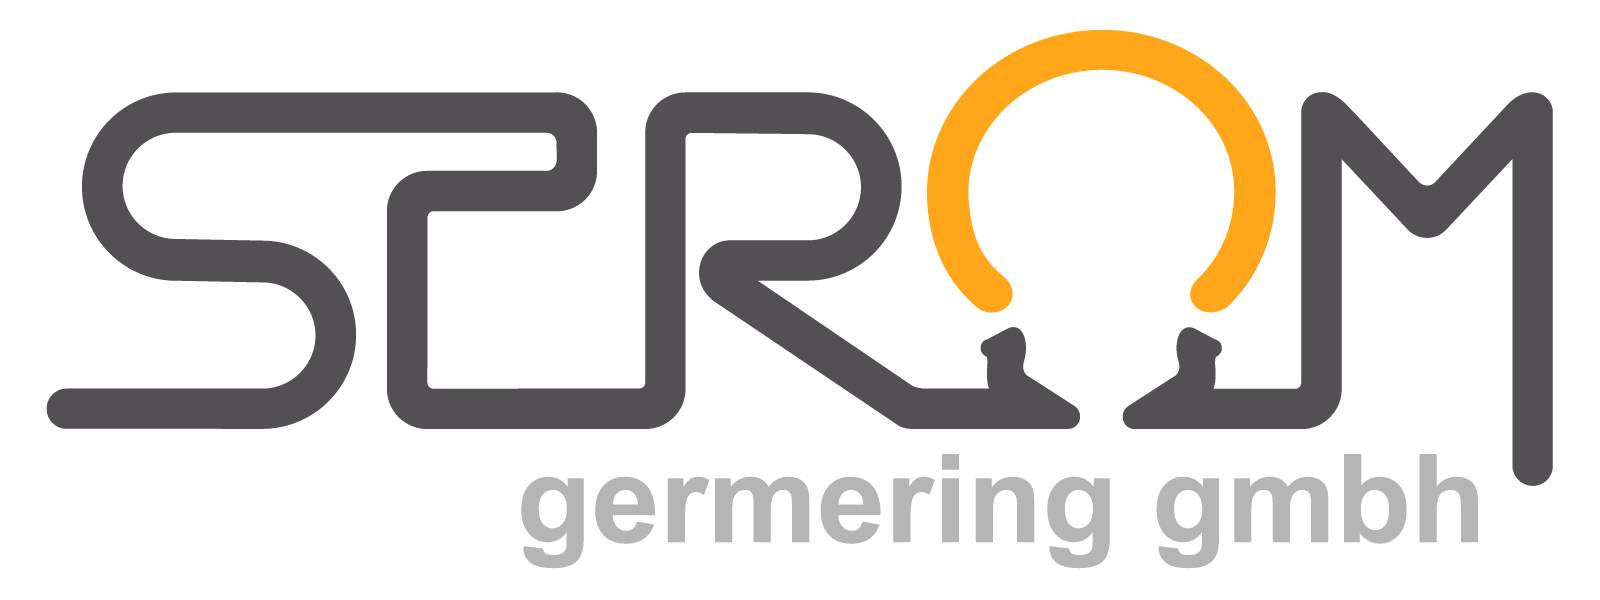 logo_germering